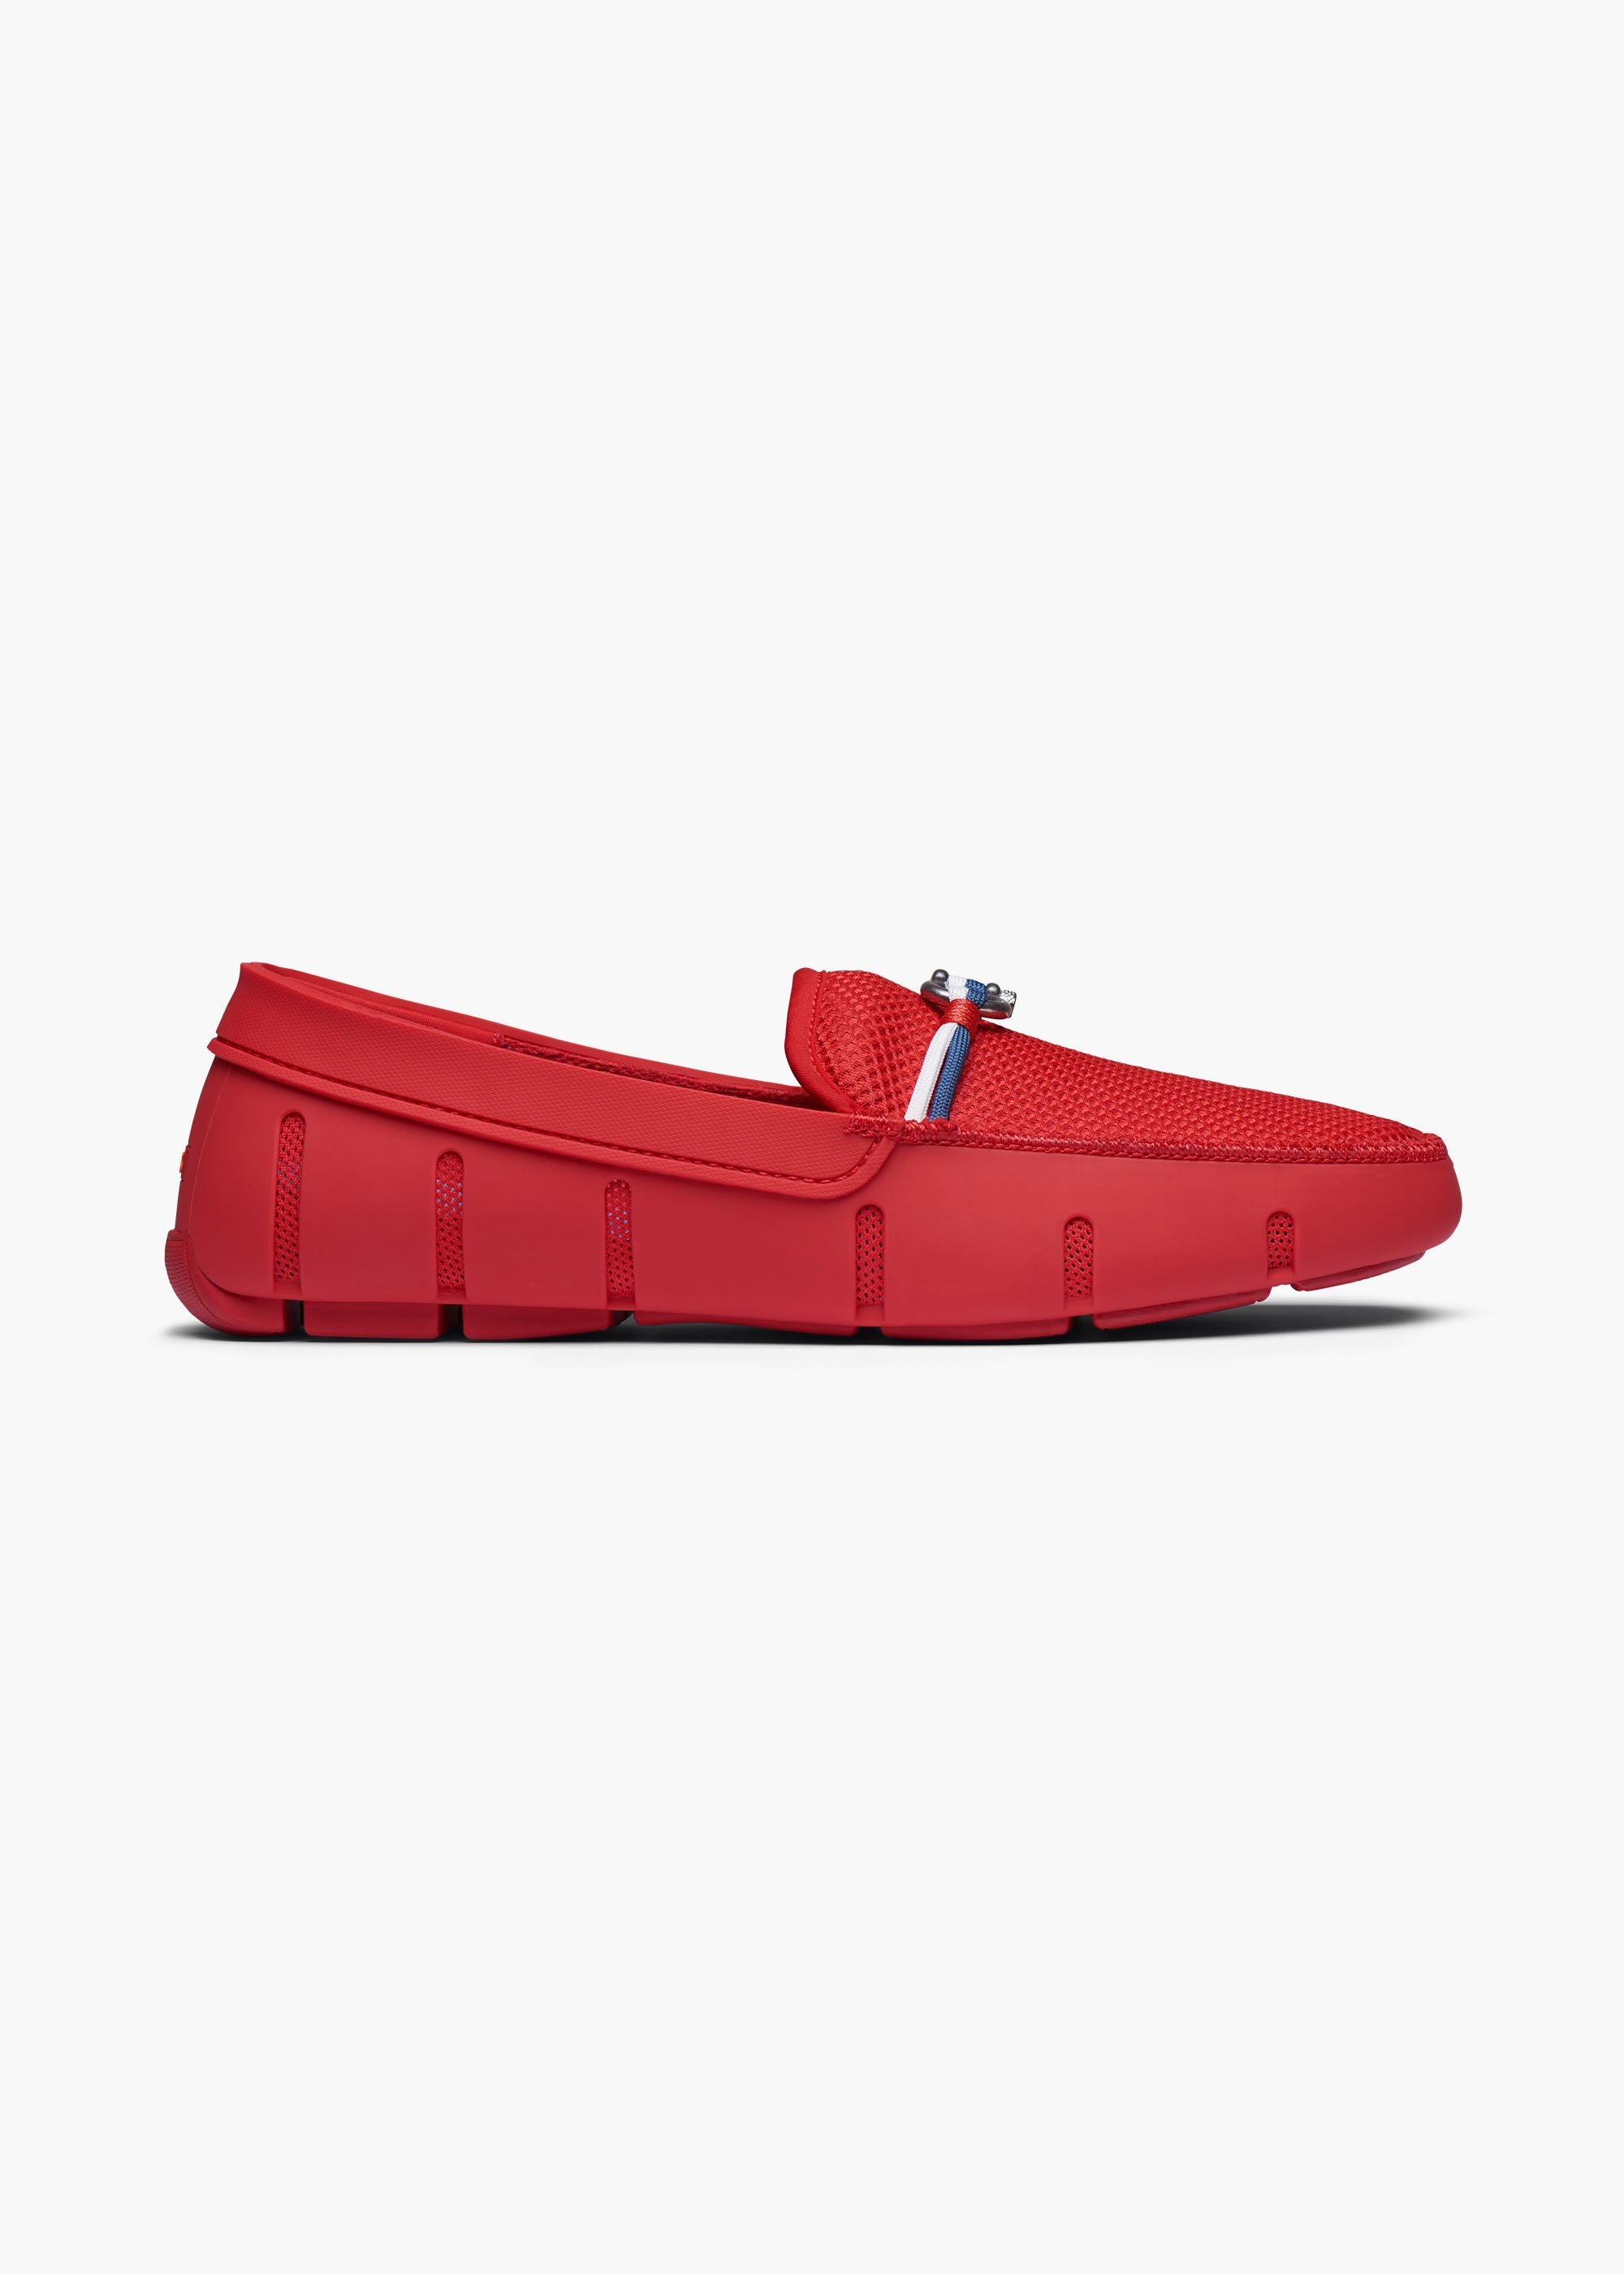 Louis Vuitton Slip On Moccasin Red Driving Loafer Dress Shoe Men